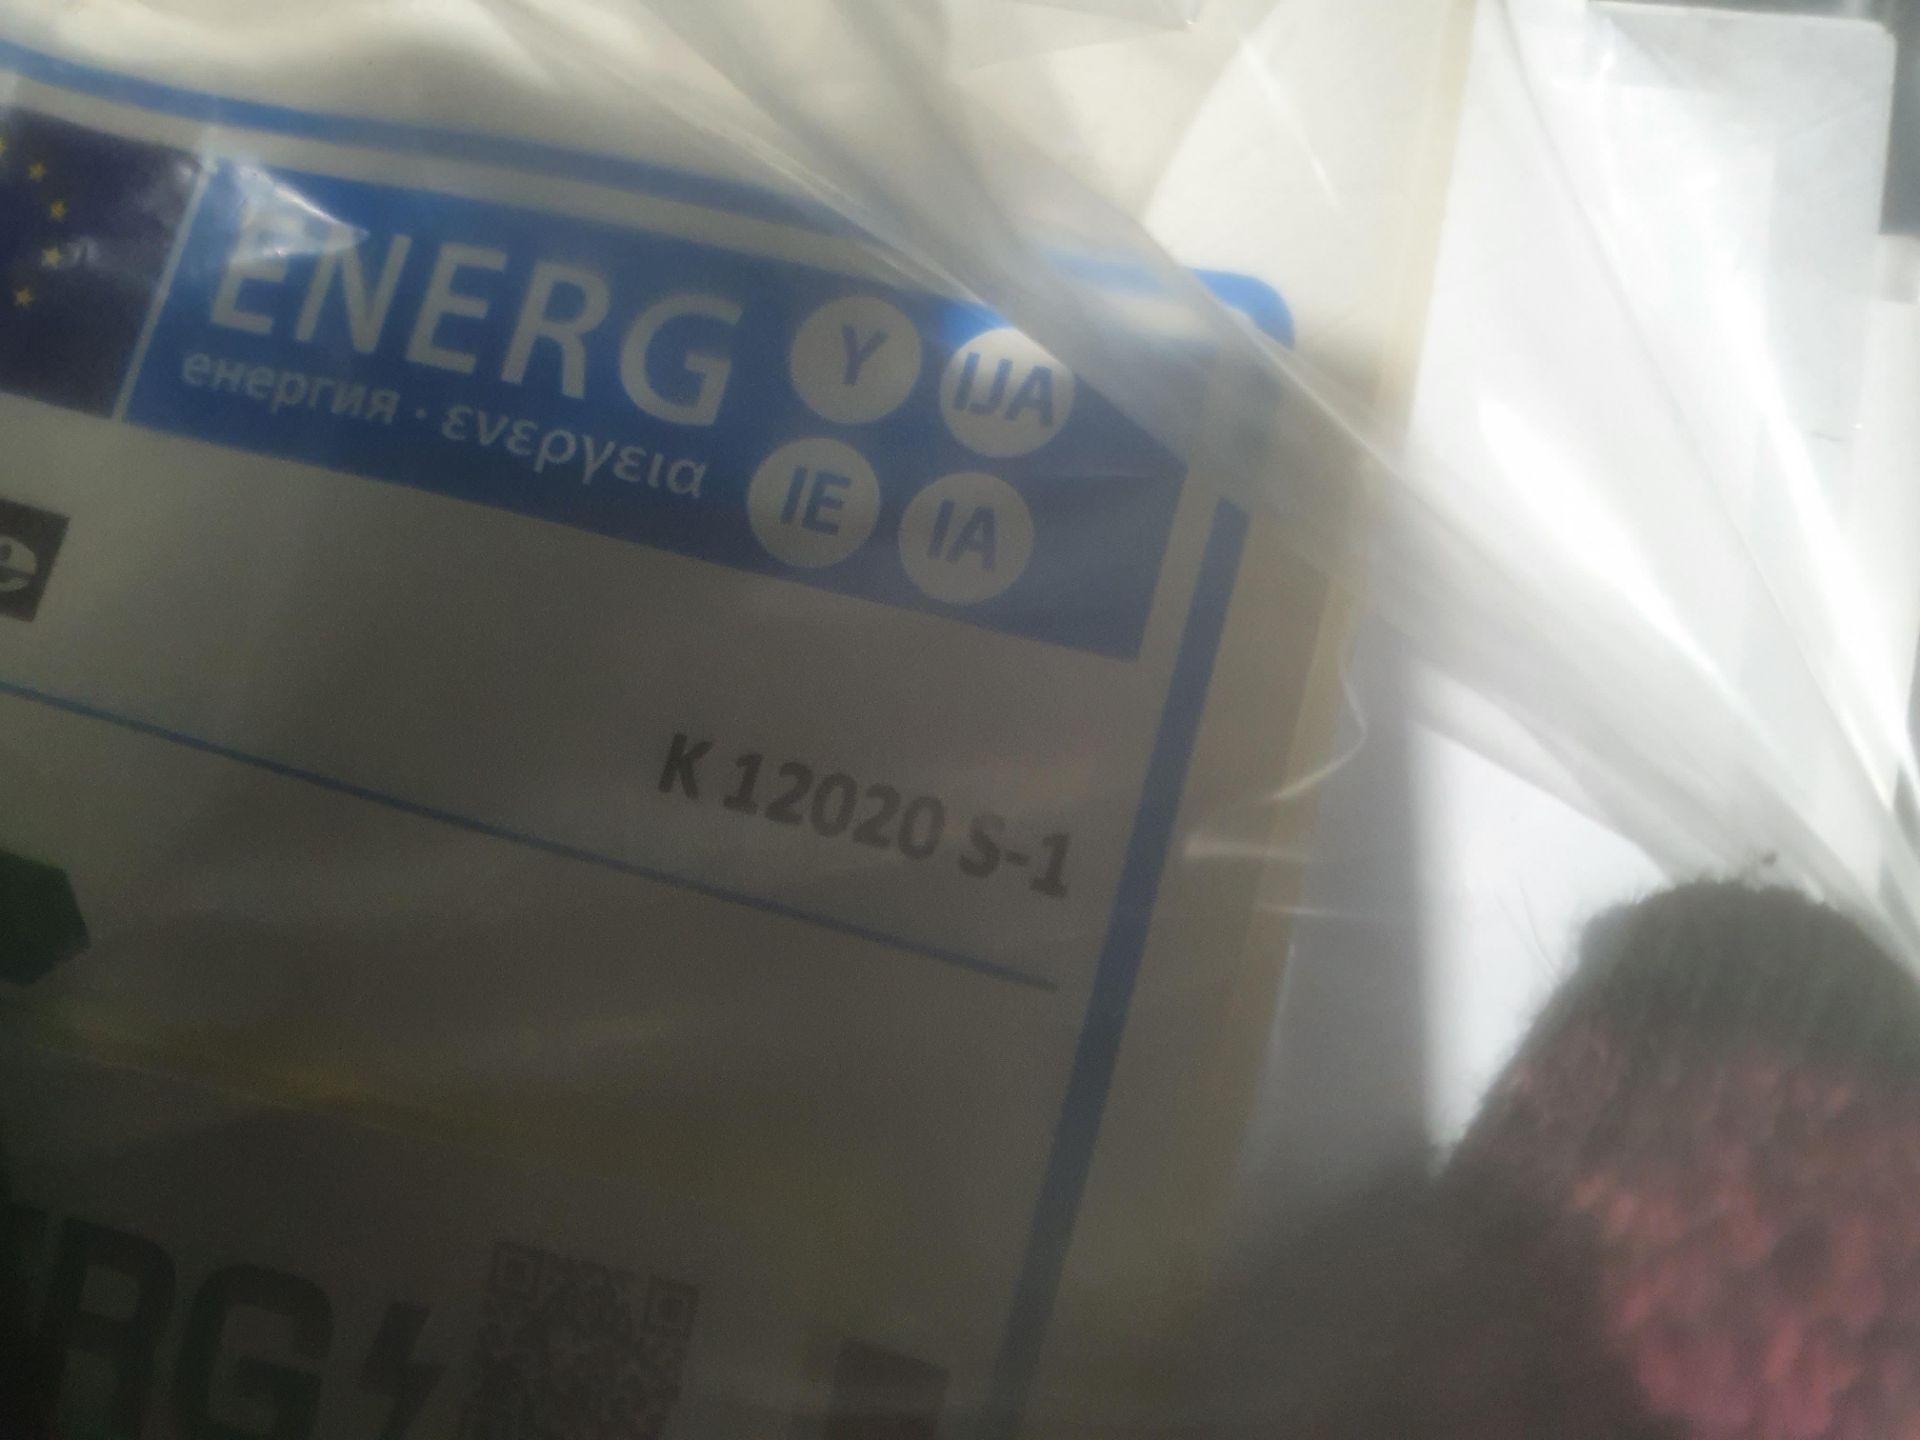 Miele K 12020, Freestanding Undercounter Fridge, Energy Efficiency Rating E, in White RRP £469.99 - Image 6 of 6